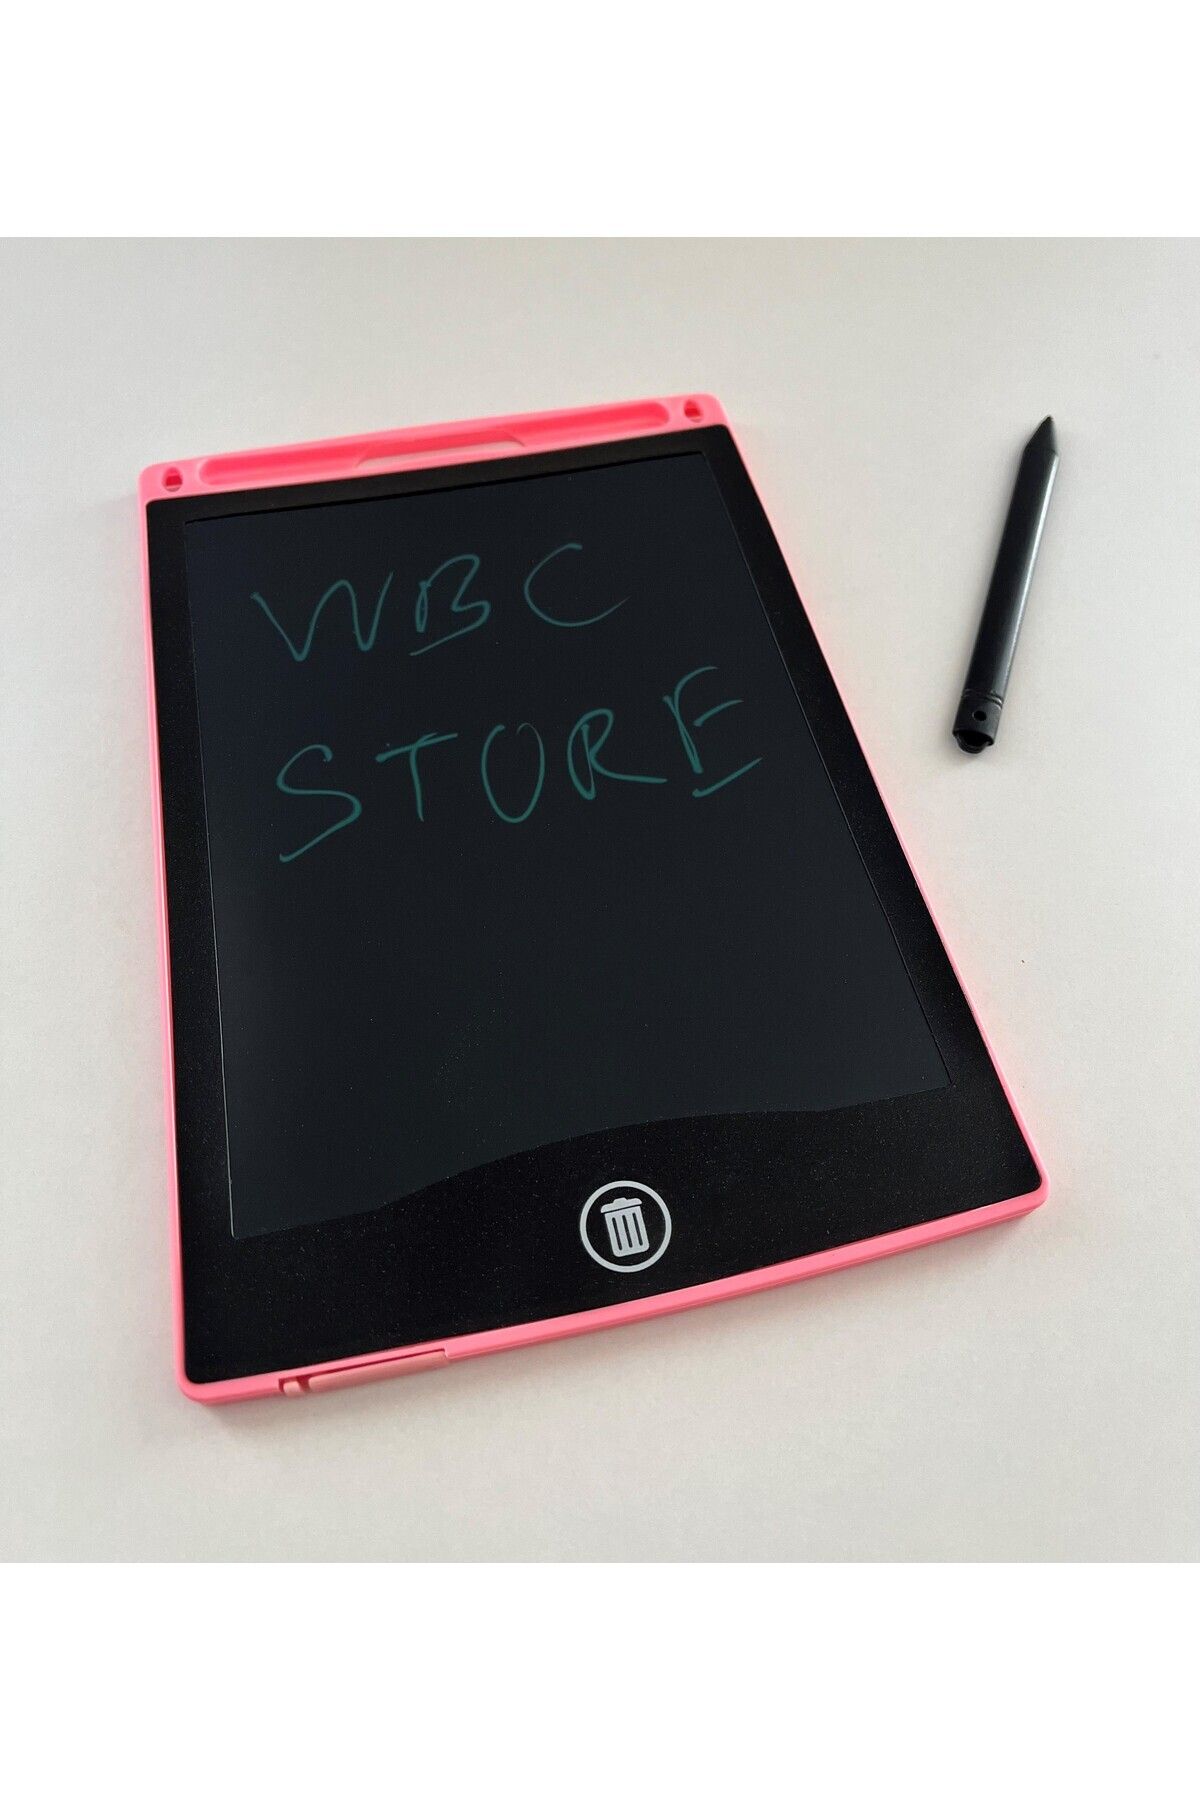 WBC STORE Lcd Writing Tablet Çizim Yazı Tahtası 8.5 Inç Dijital Kalemli